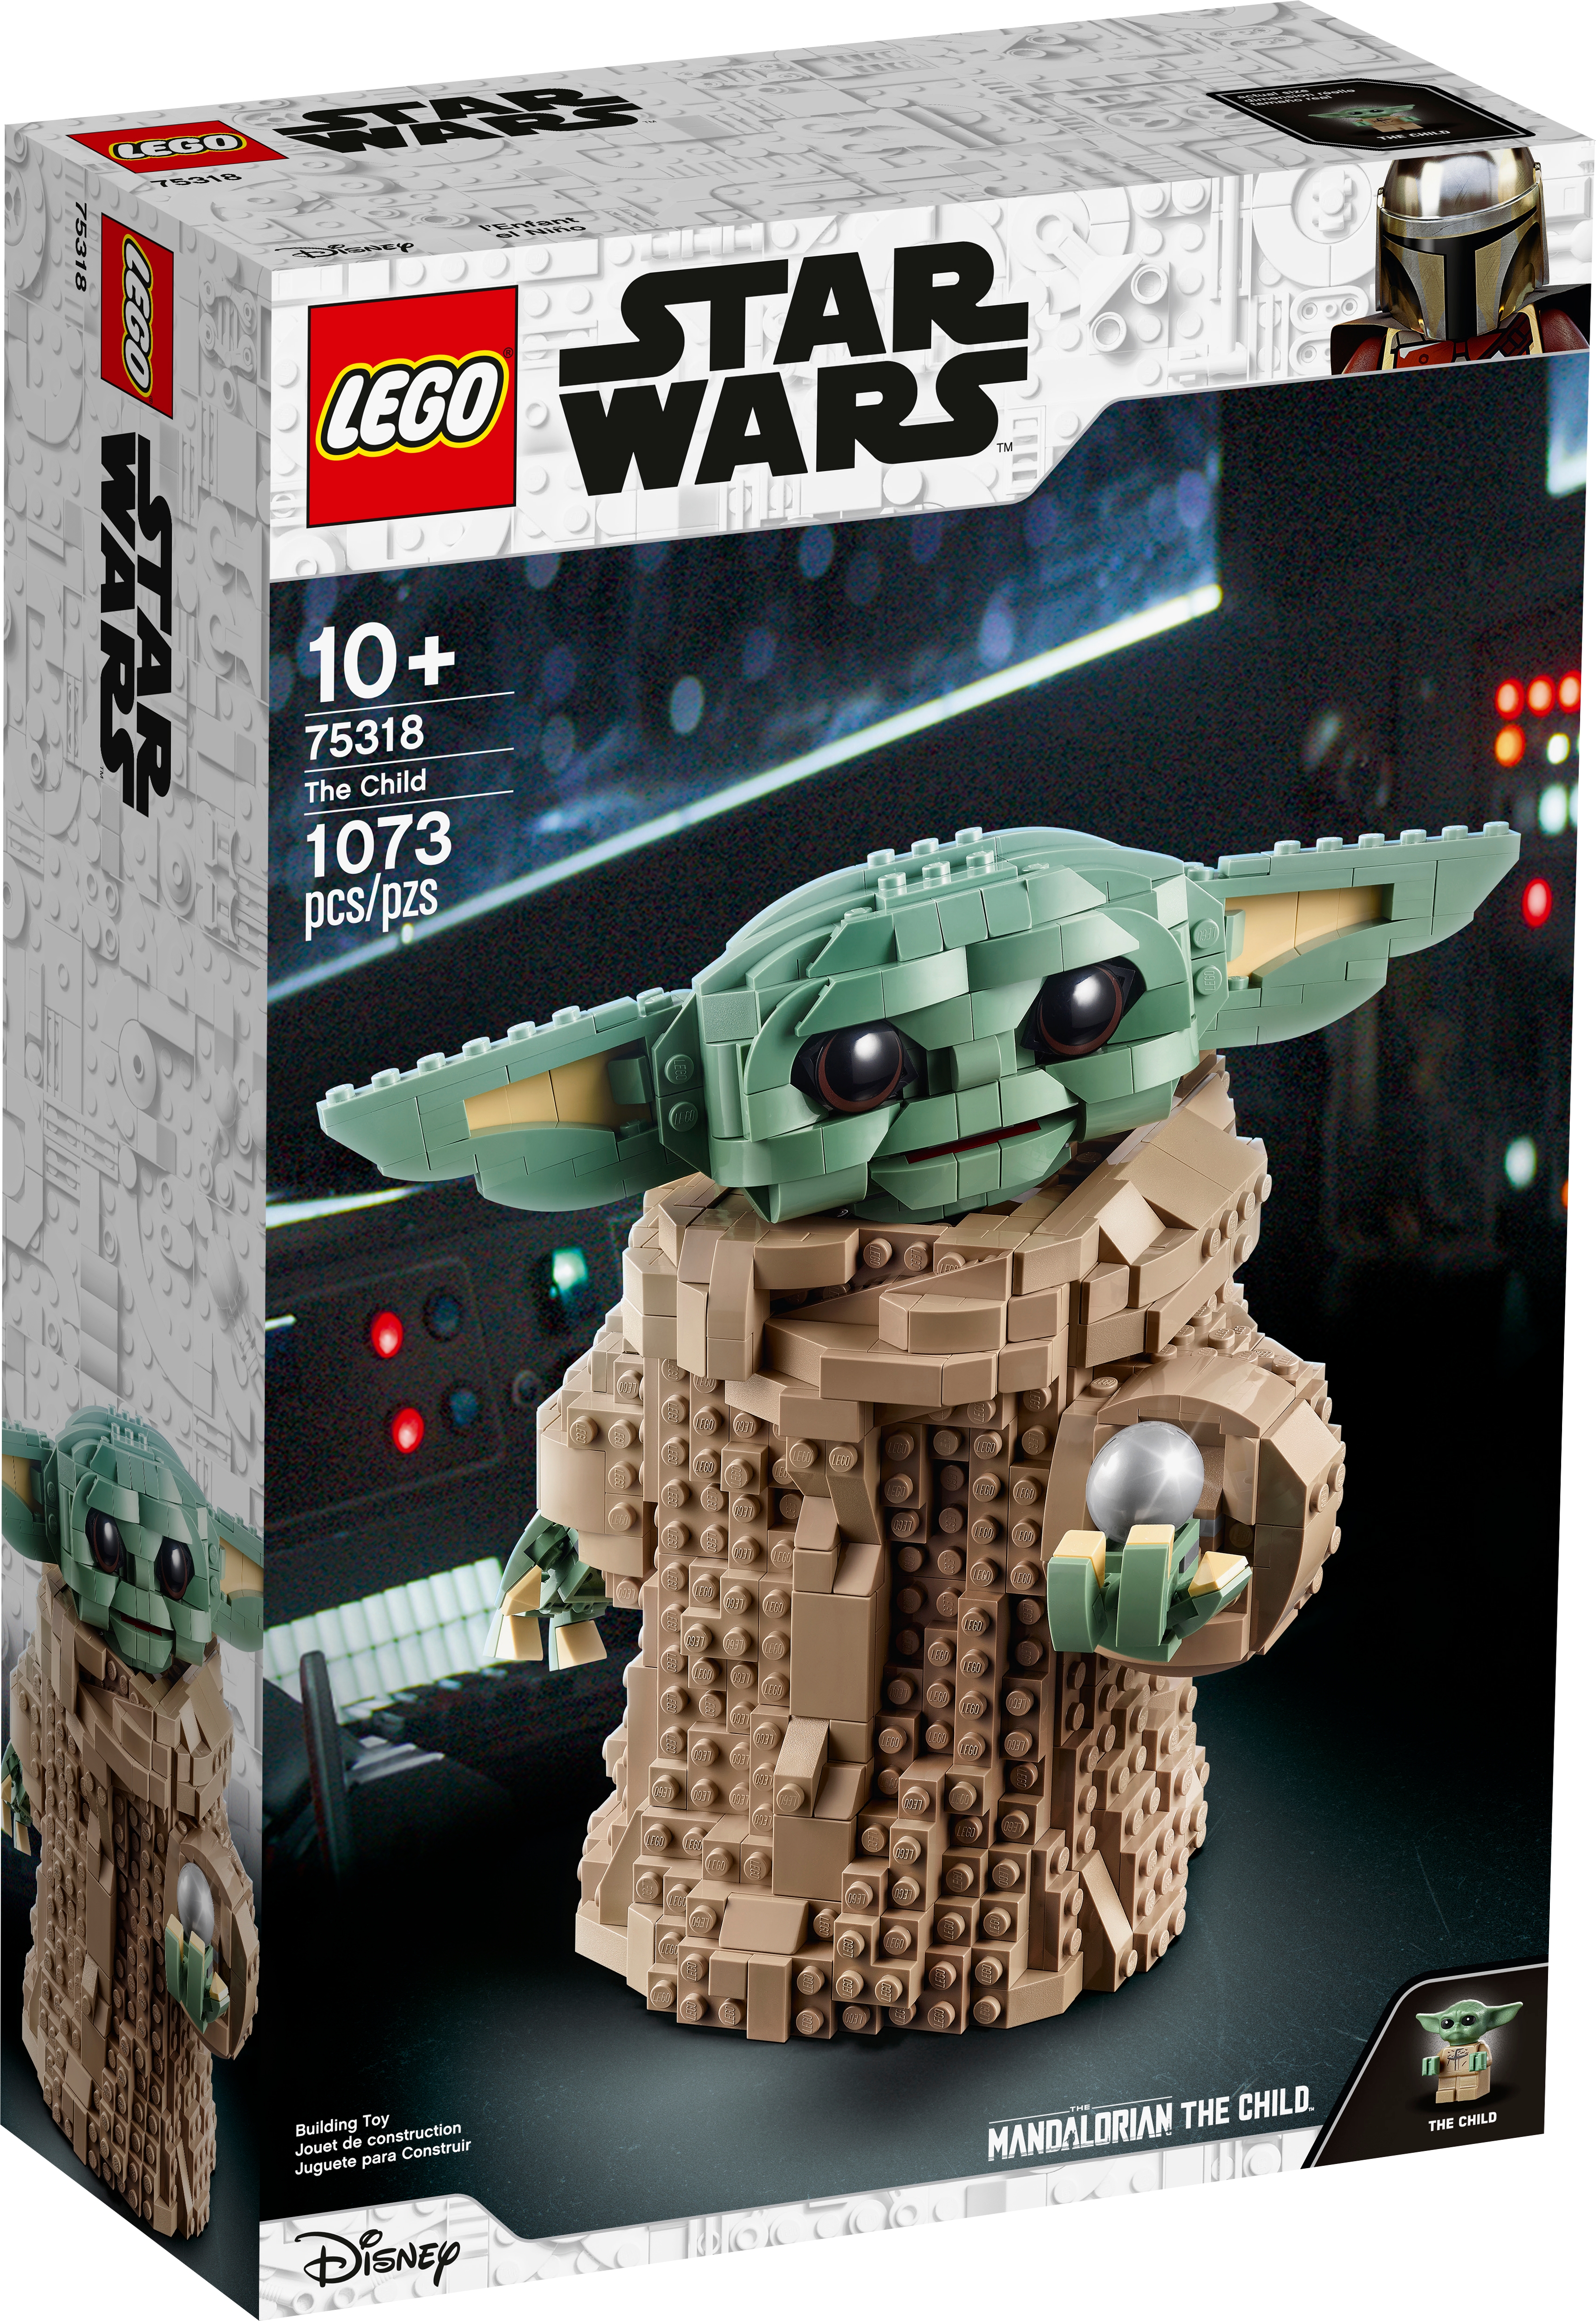 LEGO Star Wars Grogu Baby Yoda Minifigure Keyring 854187 